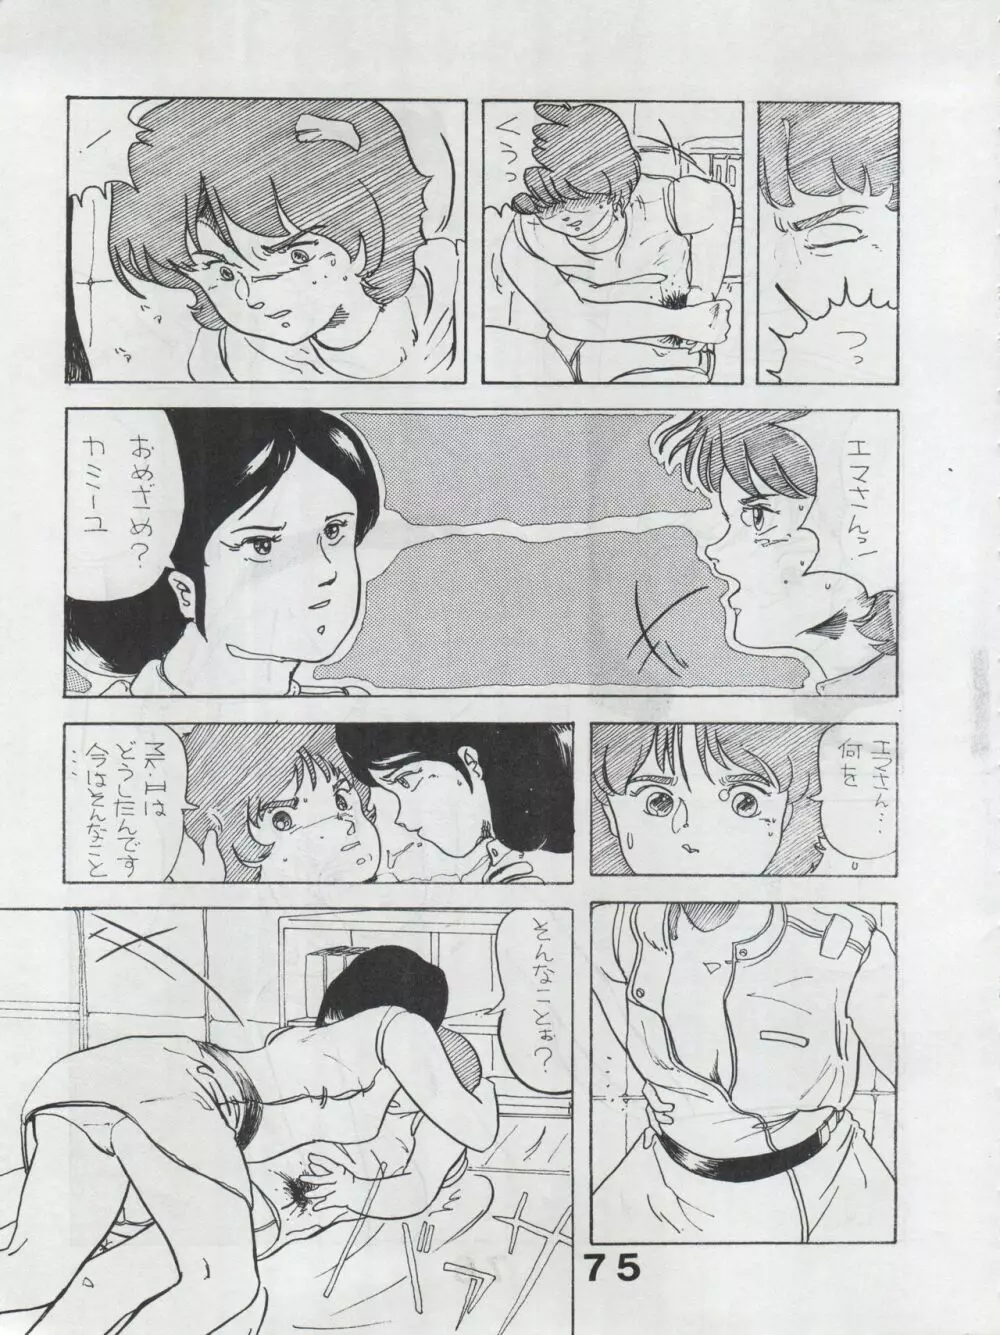 MoN MoN もんモン Vol.5 - page75